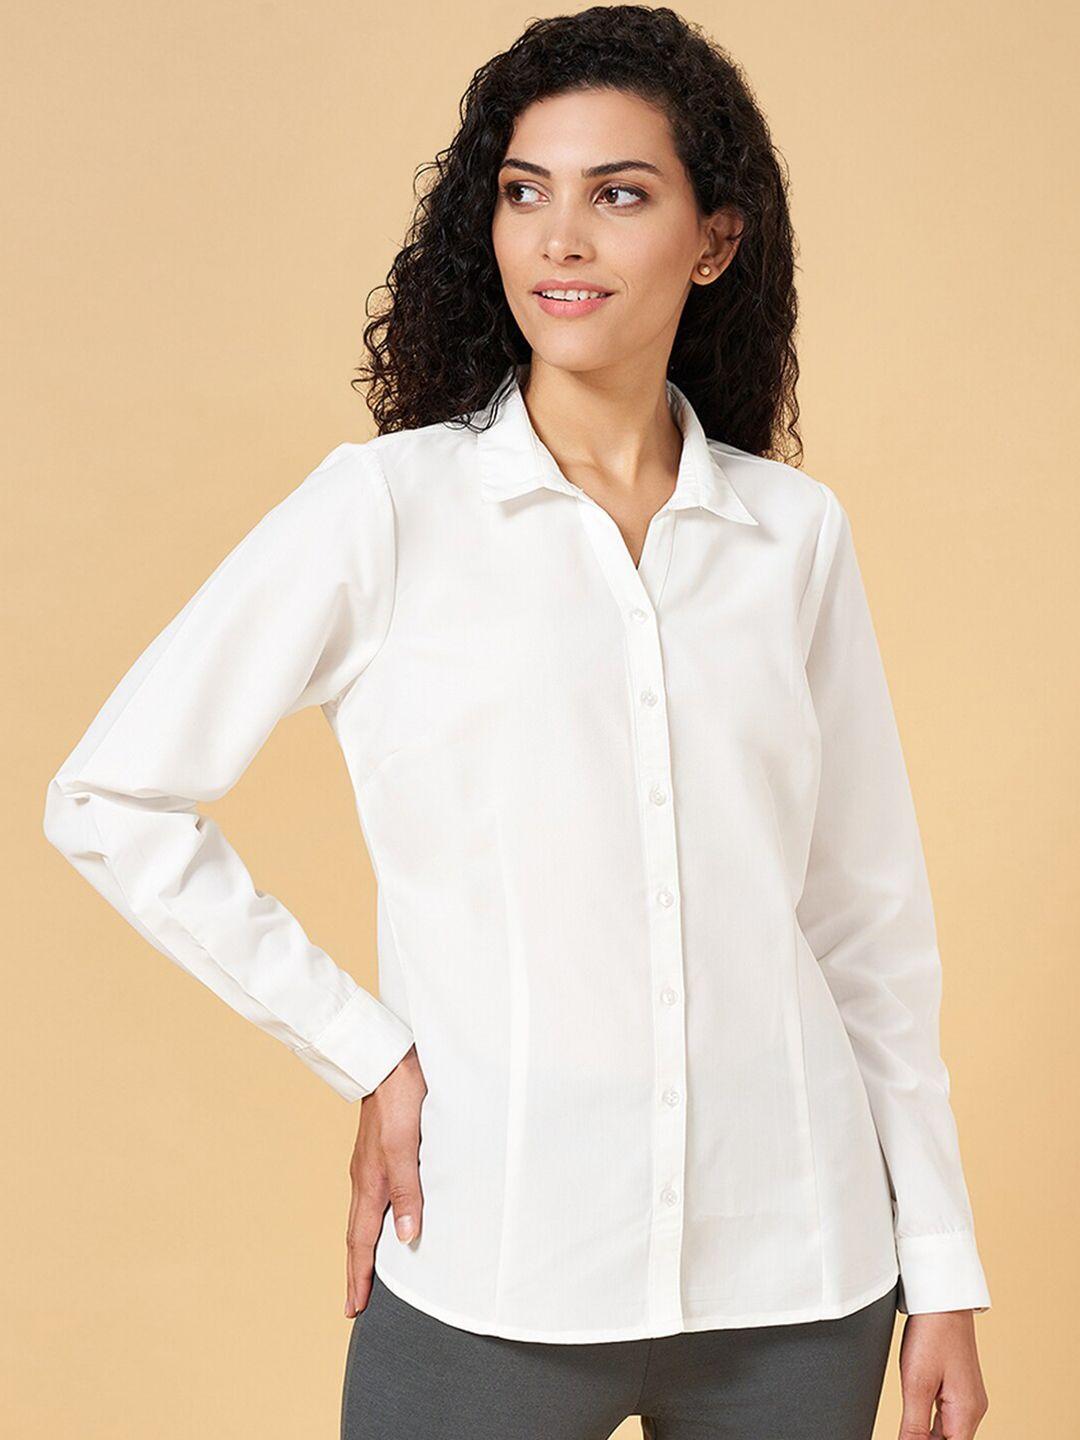 yu by pantaloons white & bright white shirt style top